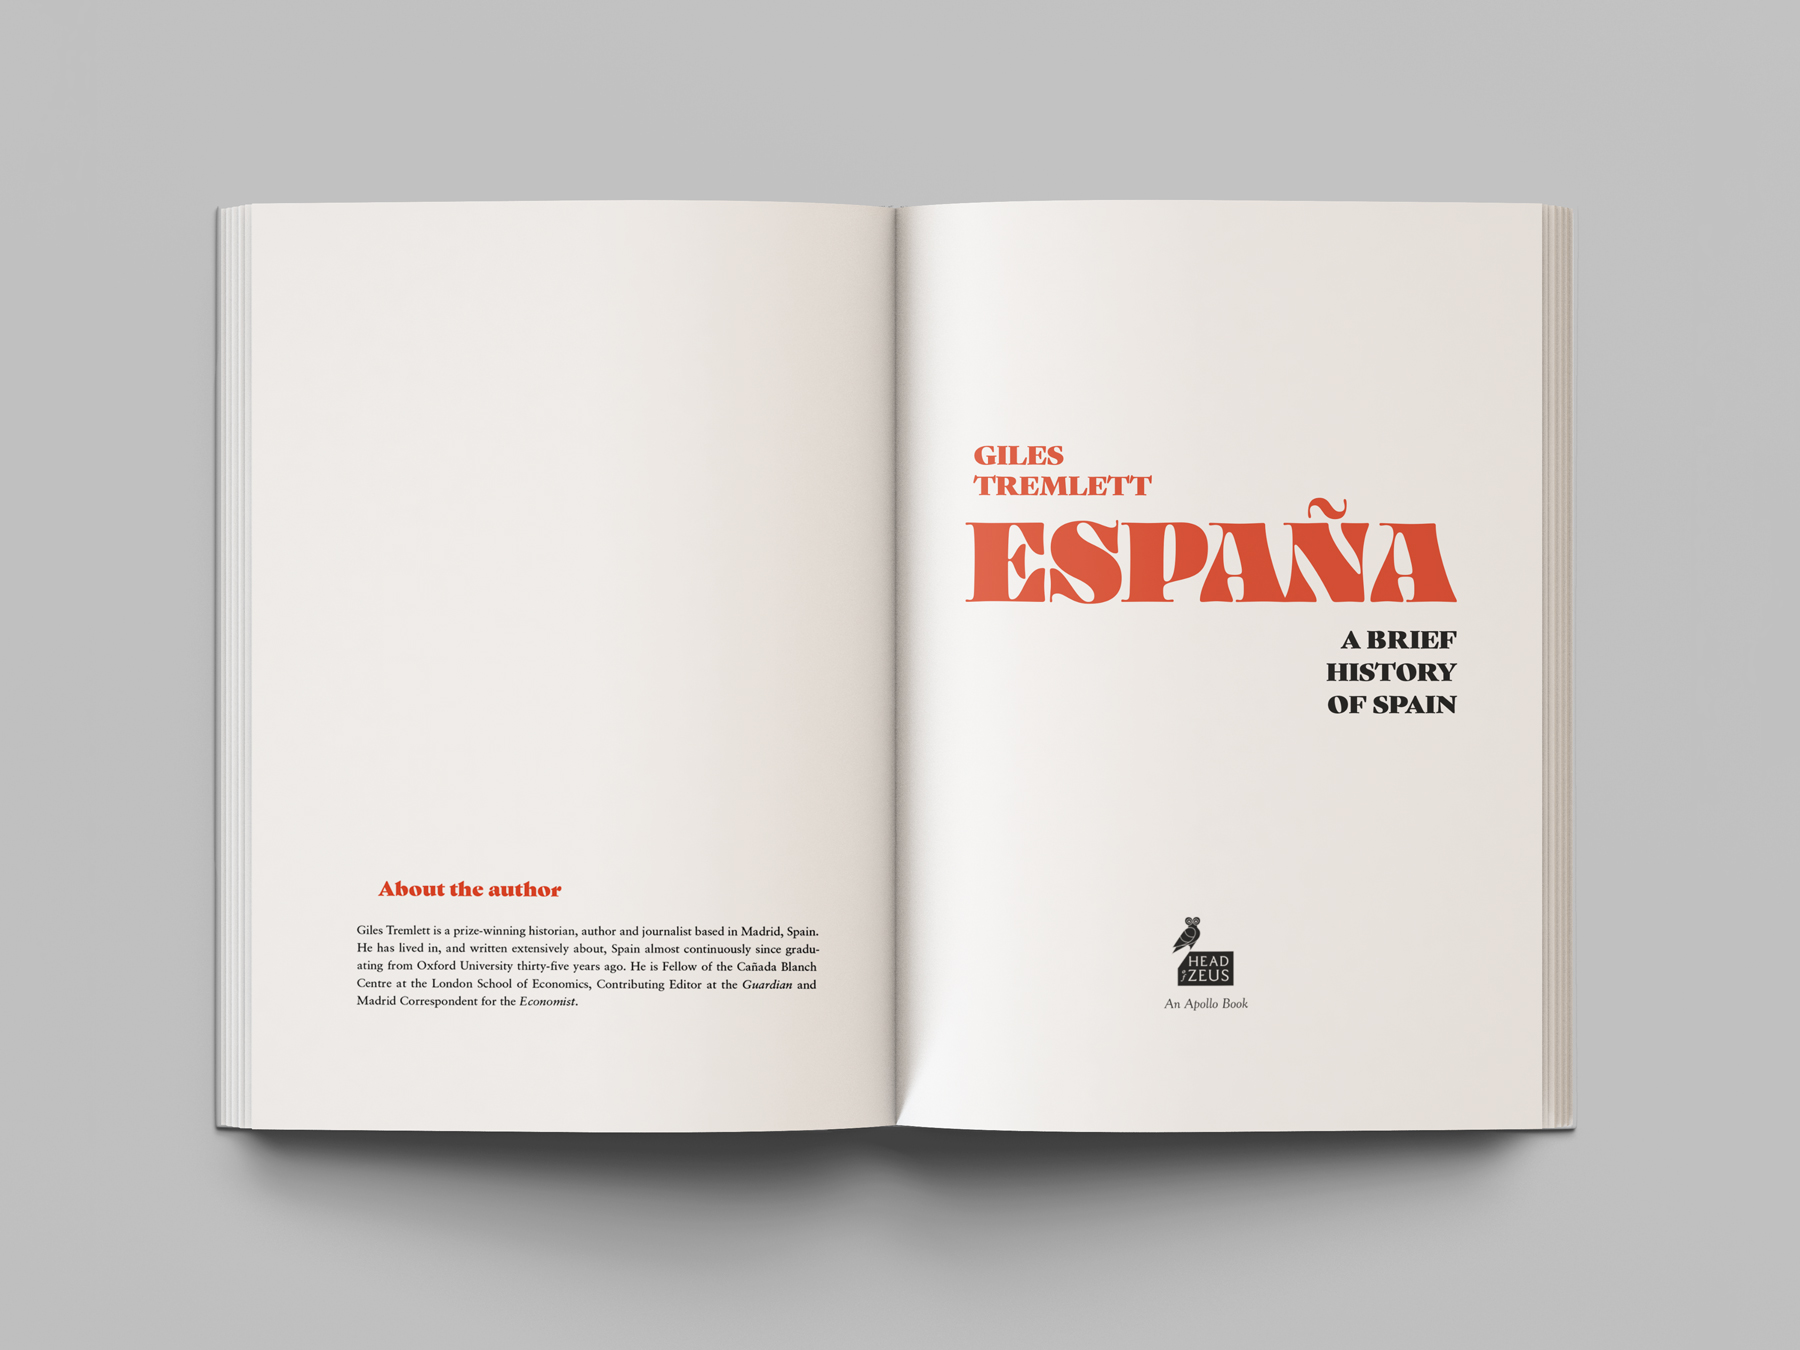 Espana title page